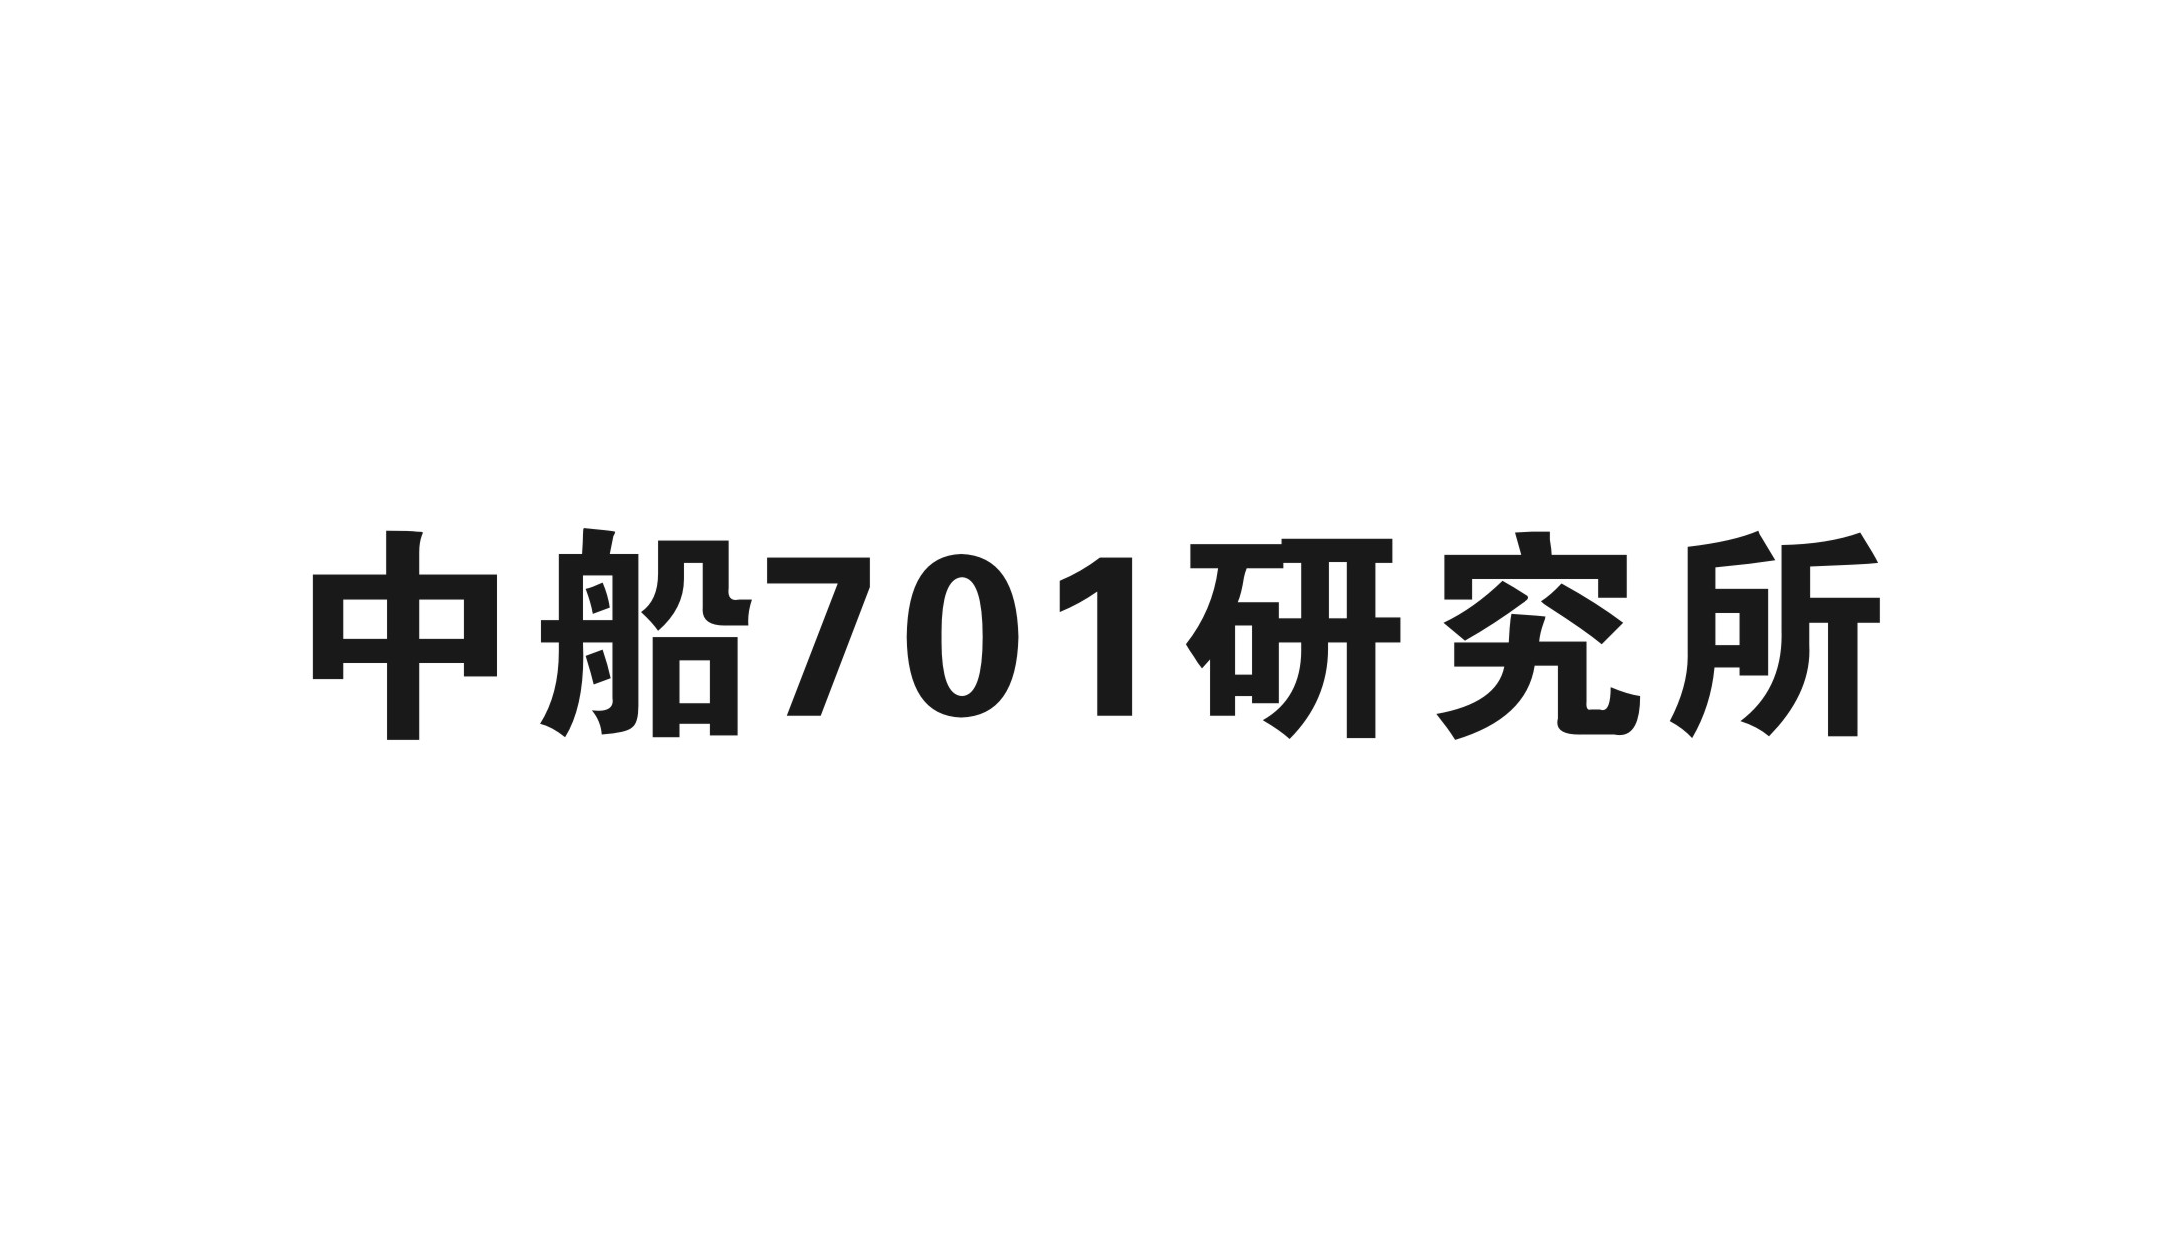 中船701研究所